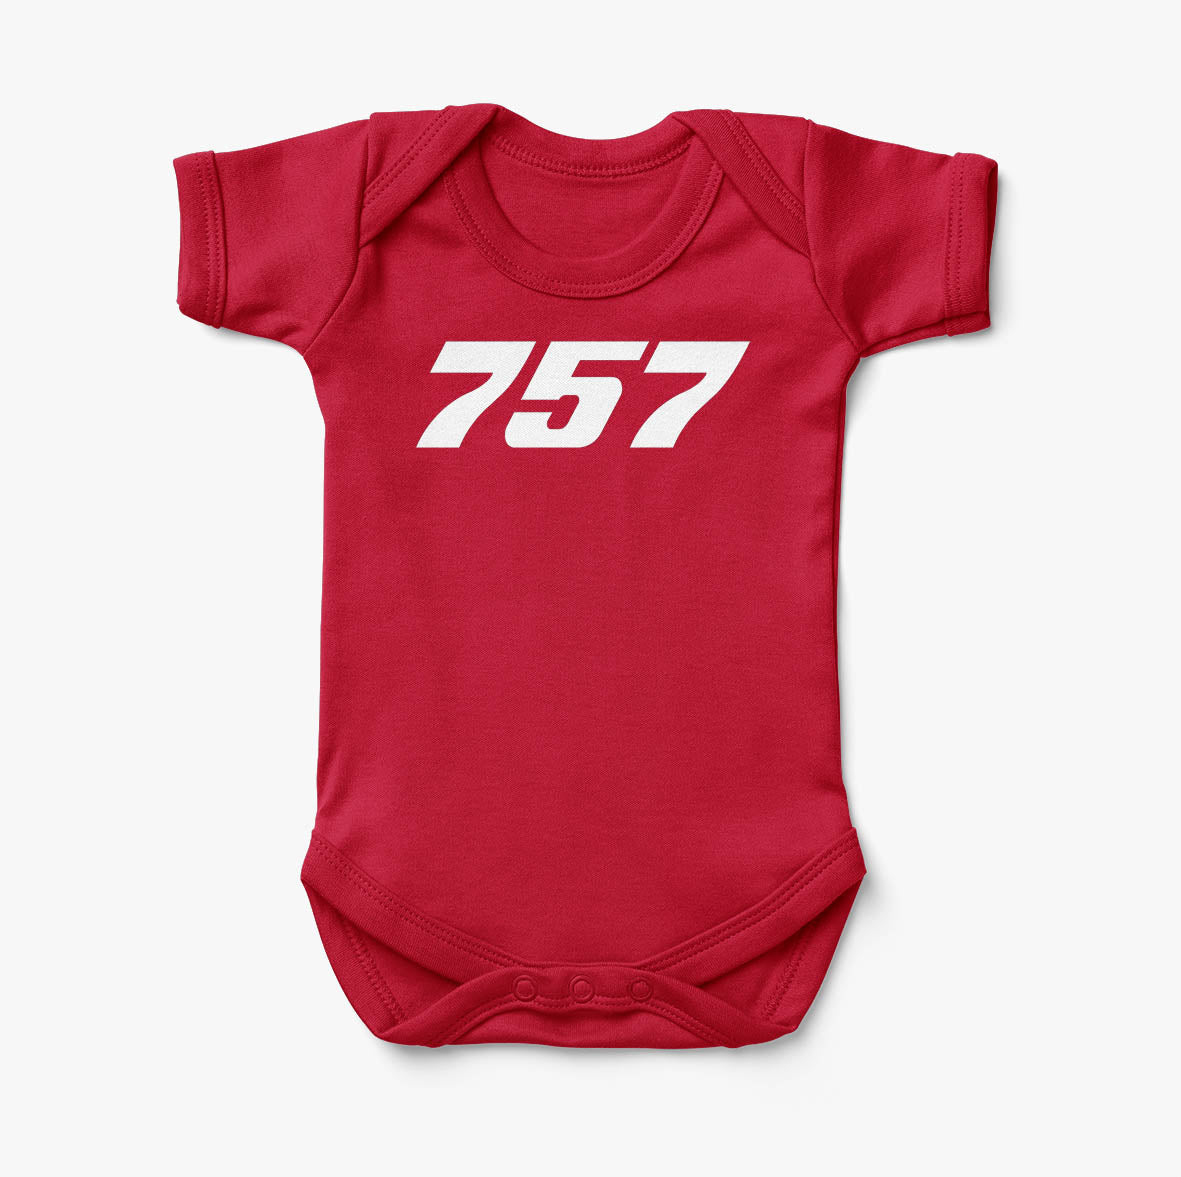 757 Flat Text Designed Baby Bodysuits